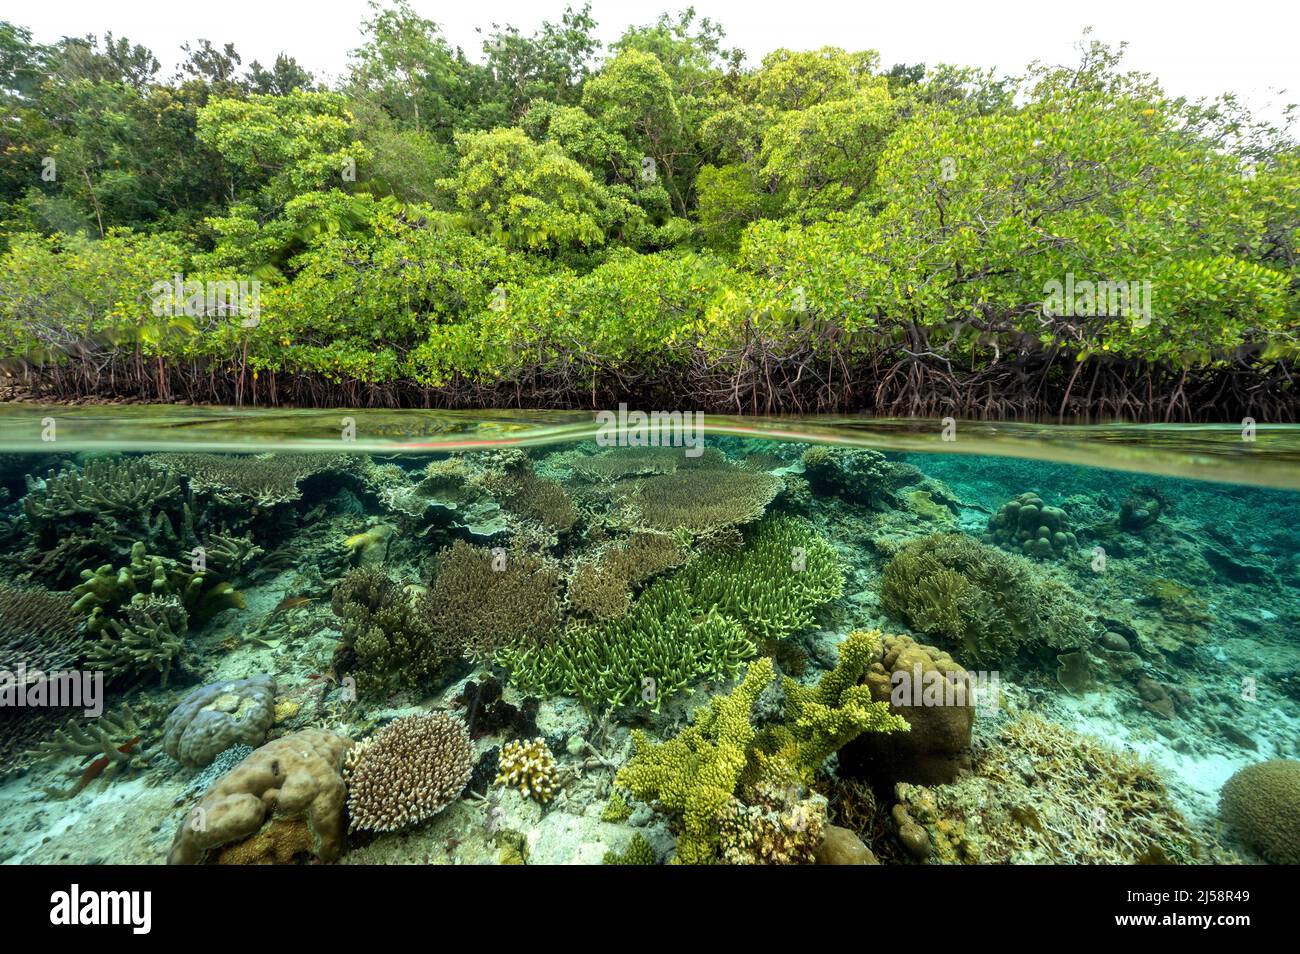 Mangrovenwald und Korallenriffe in Split Shot, Gam Island Raja Ampat Indnonesia. Stockfoto